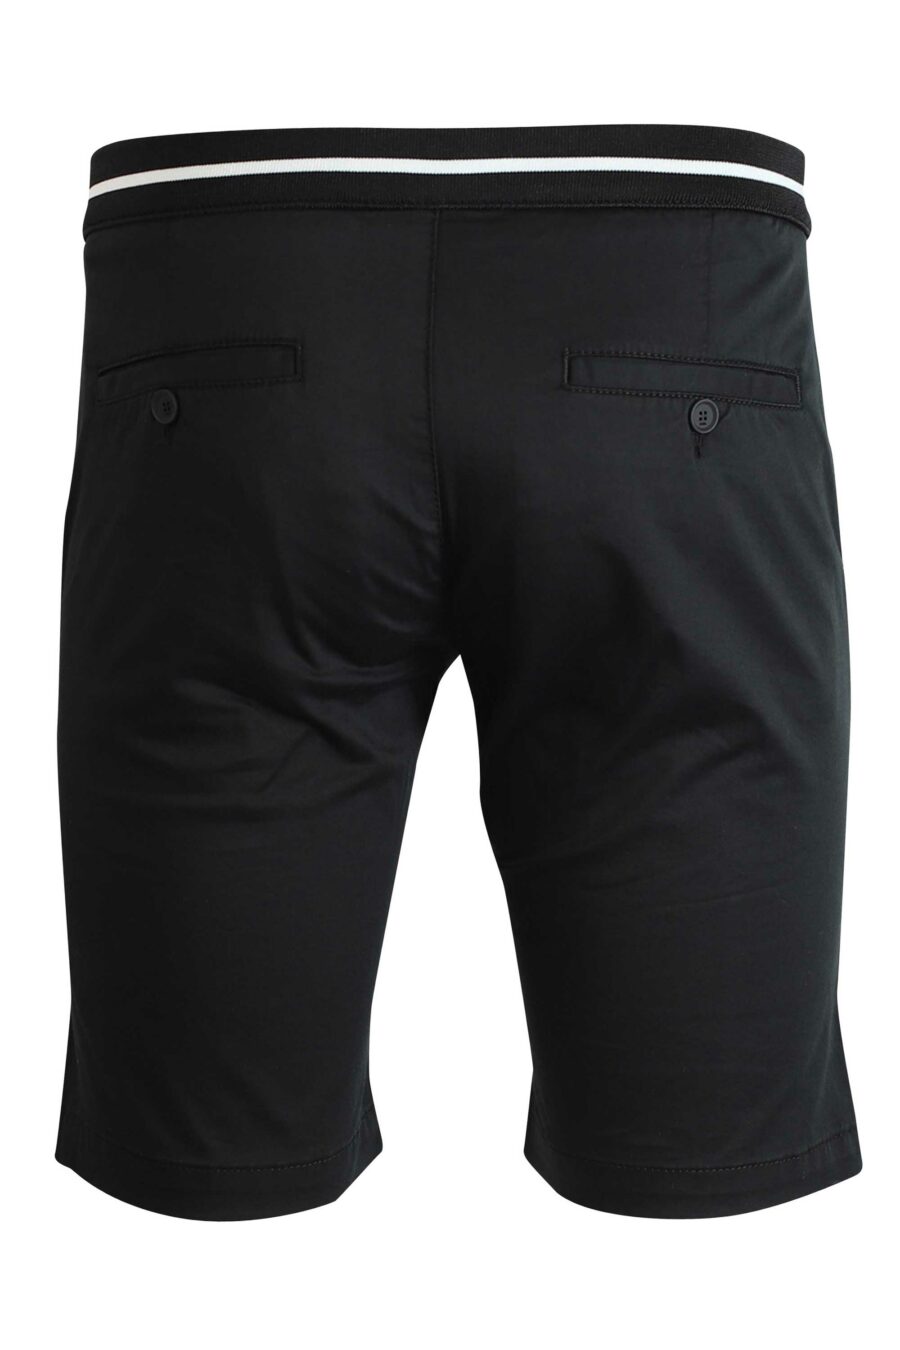 Pantalón negro corto con detalle blanco - 4062226164863 3